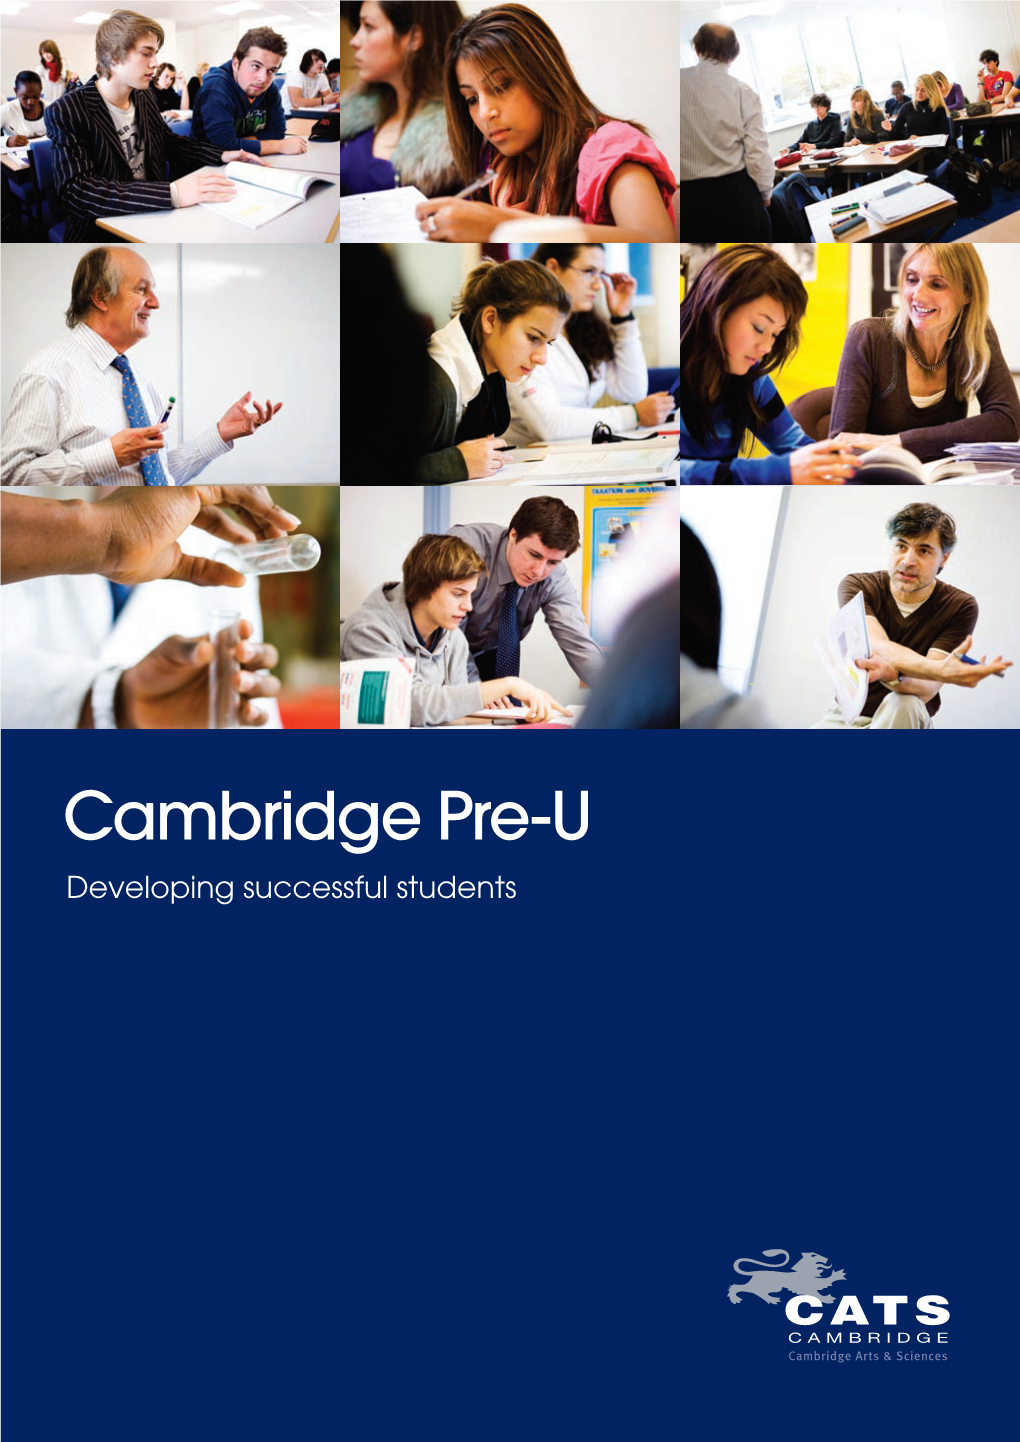 Cambridge Pre-U Developing Successful Students Cambridge Education Group What Is Cambridge Pre-U?